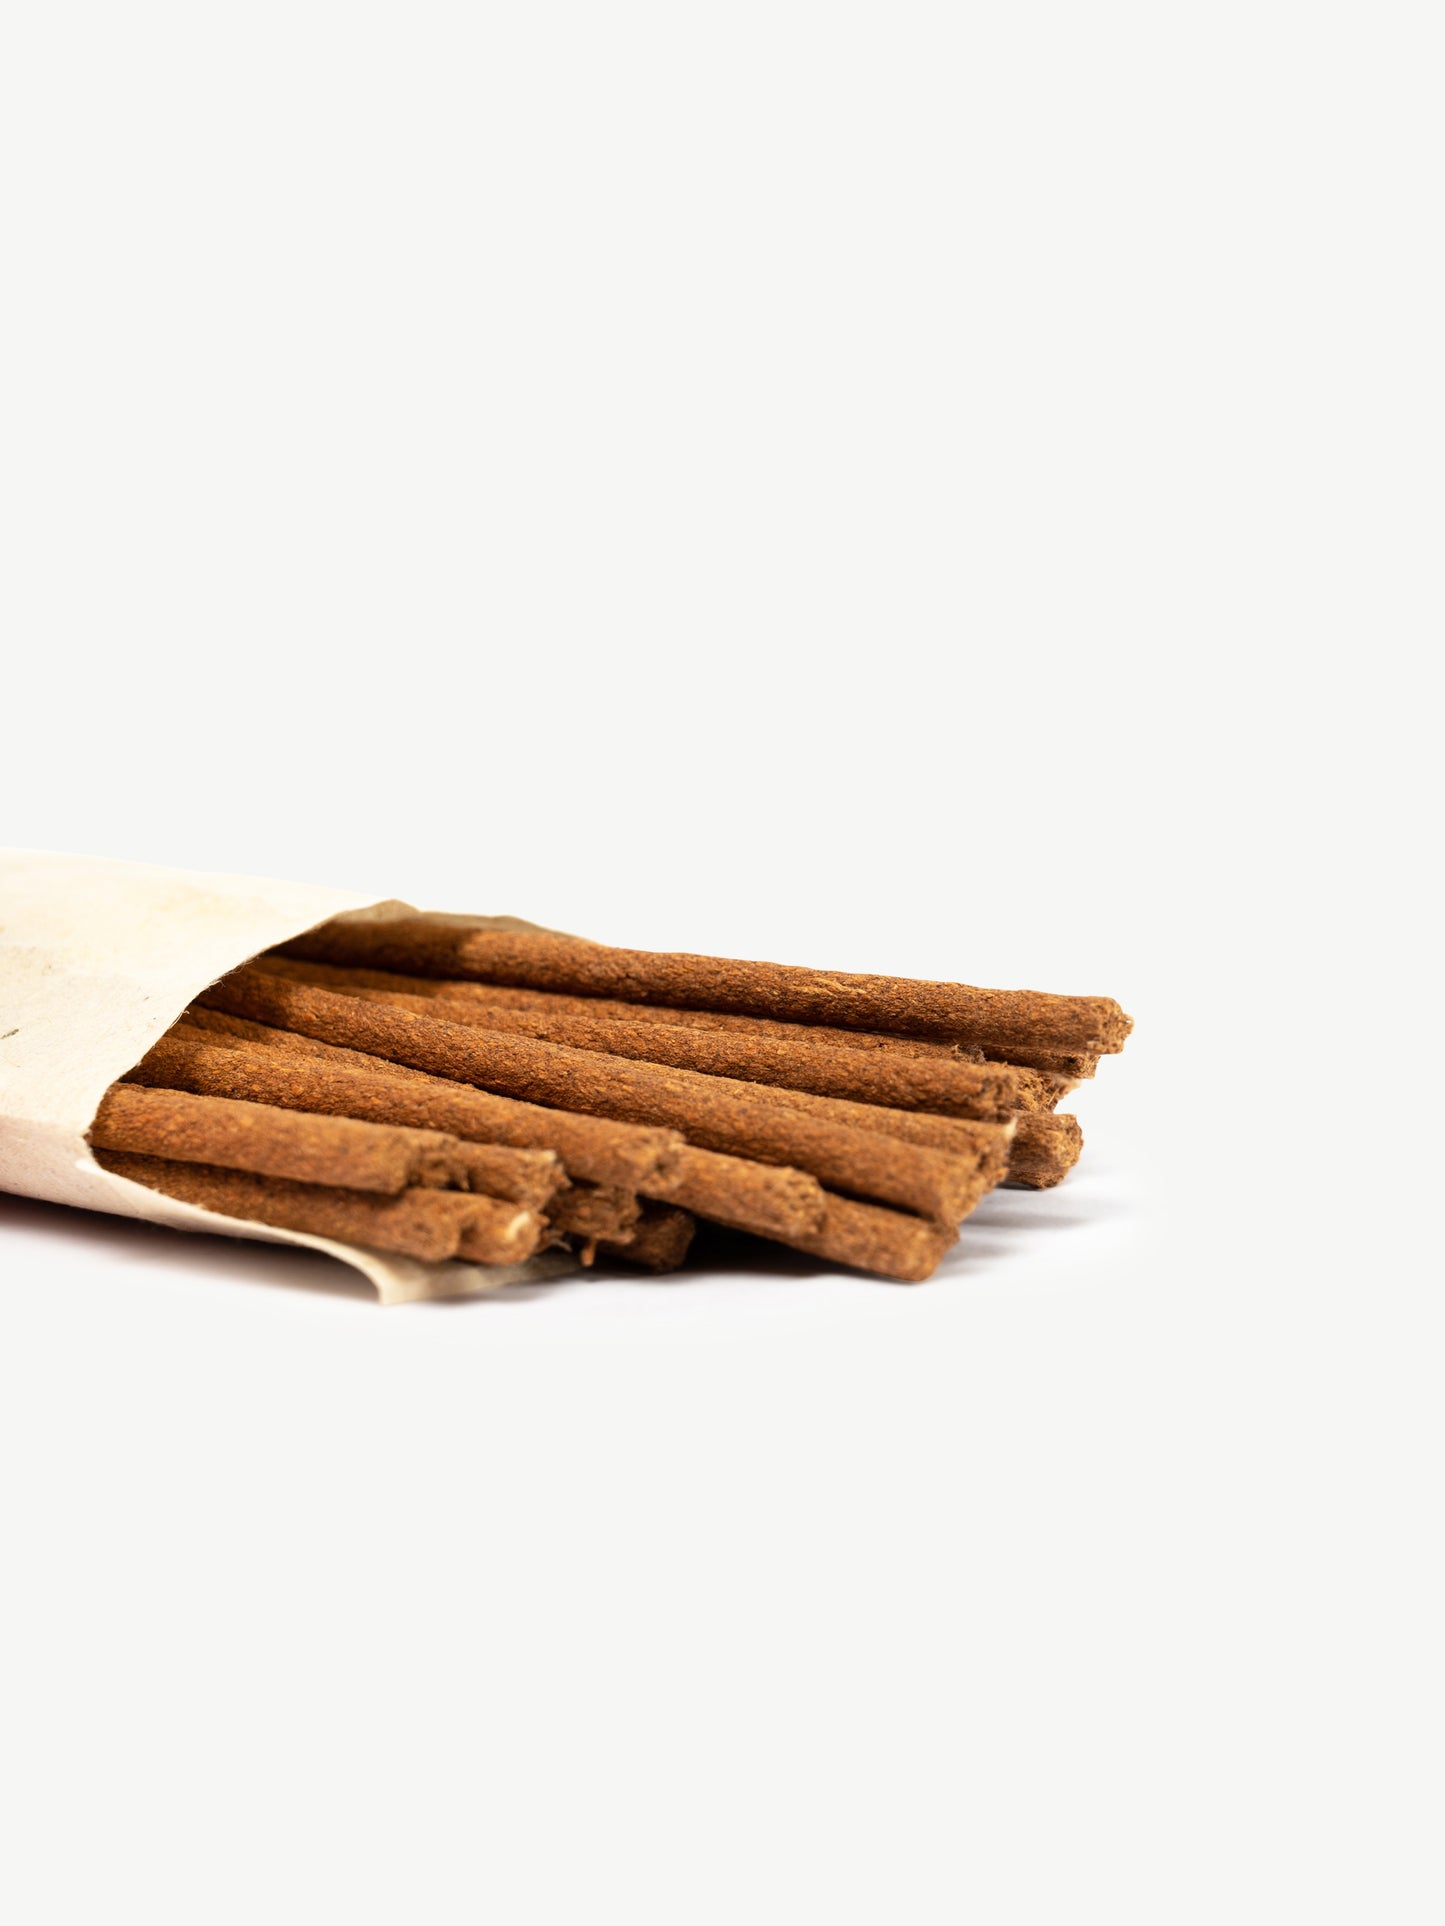 Sandalwood box Incense (2 in 1 pack)